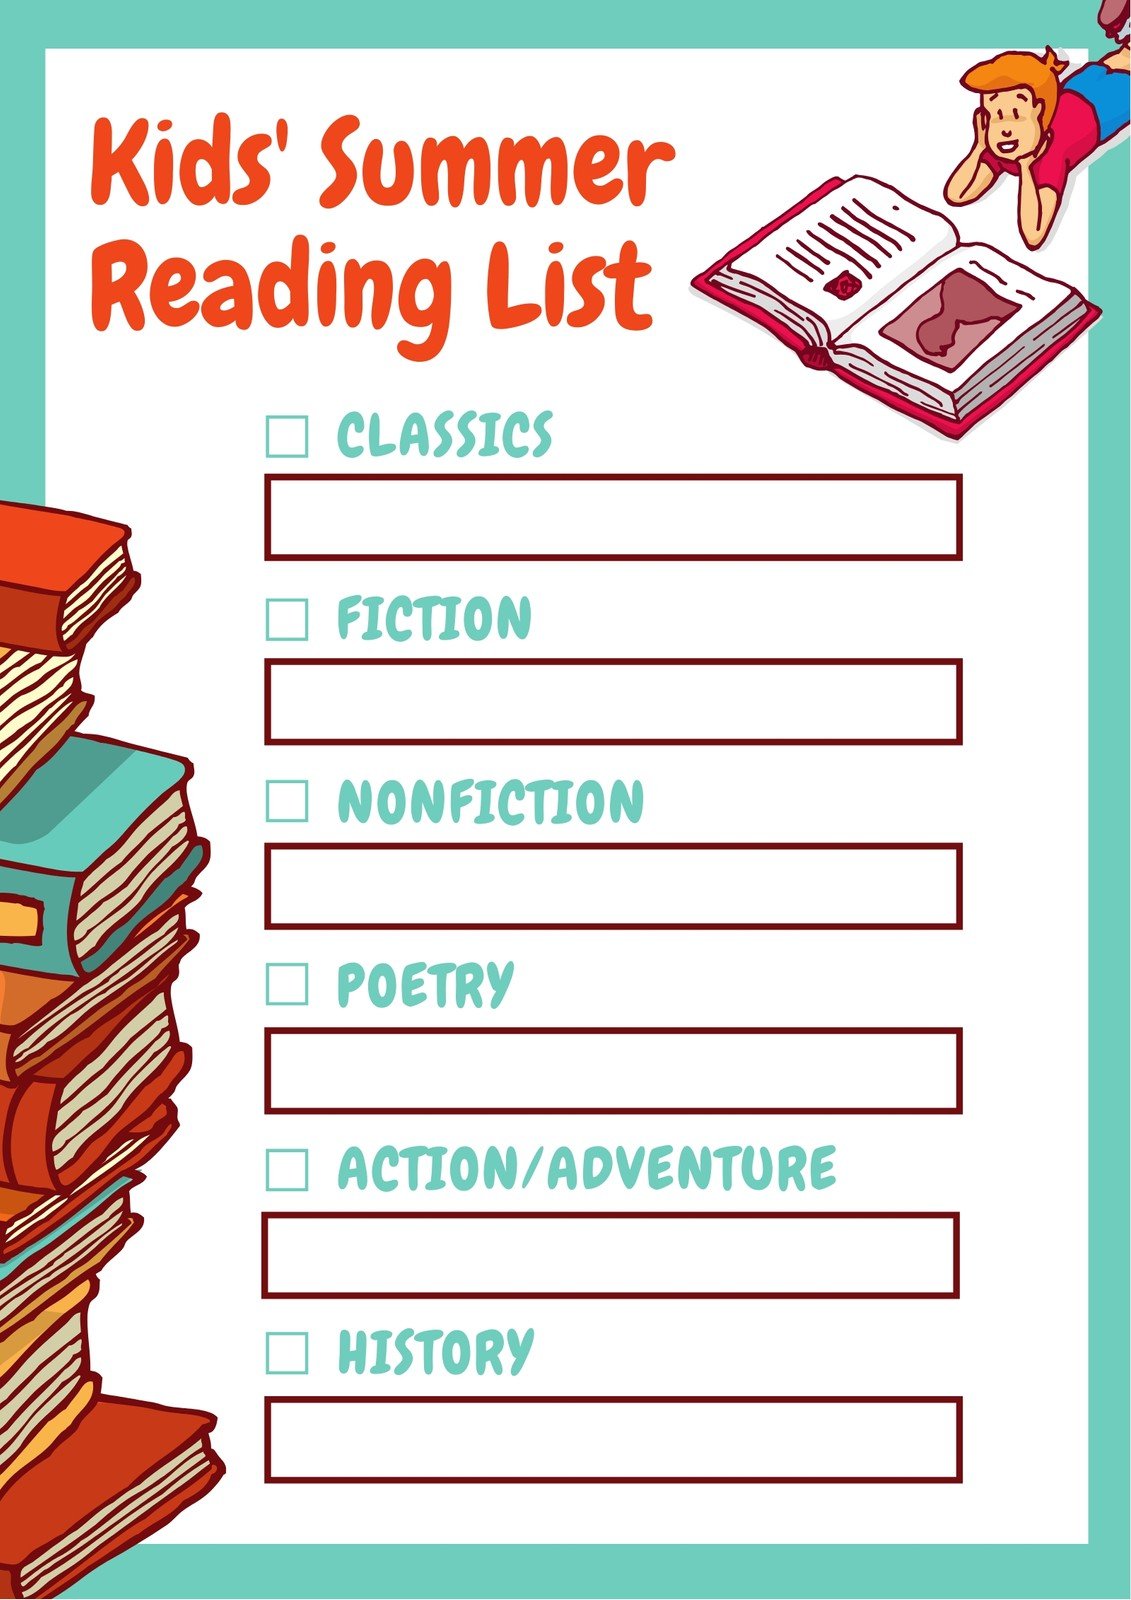 Teal and Orange Books Illustration Reading Checklist - Templates ...